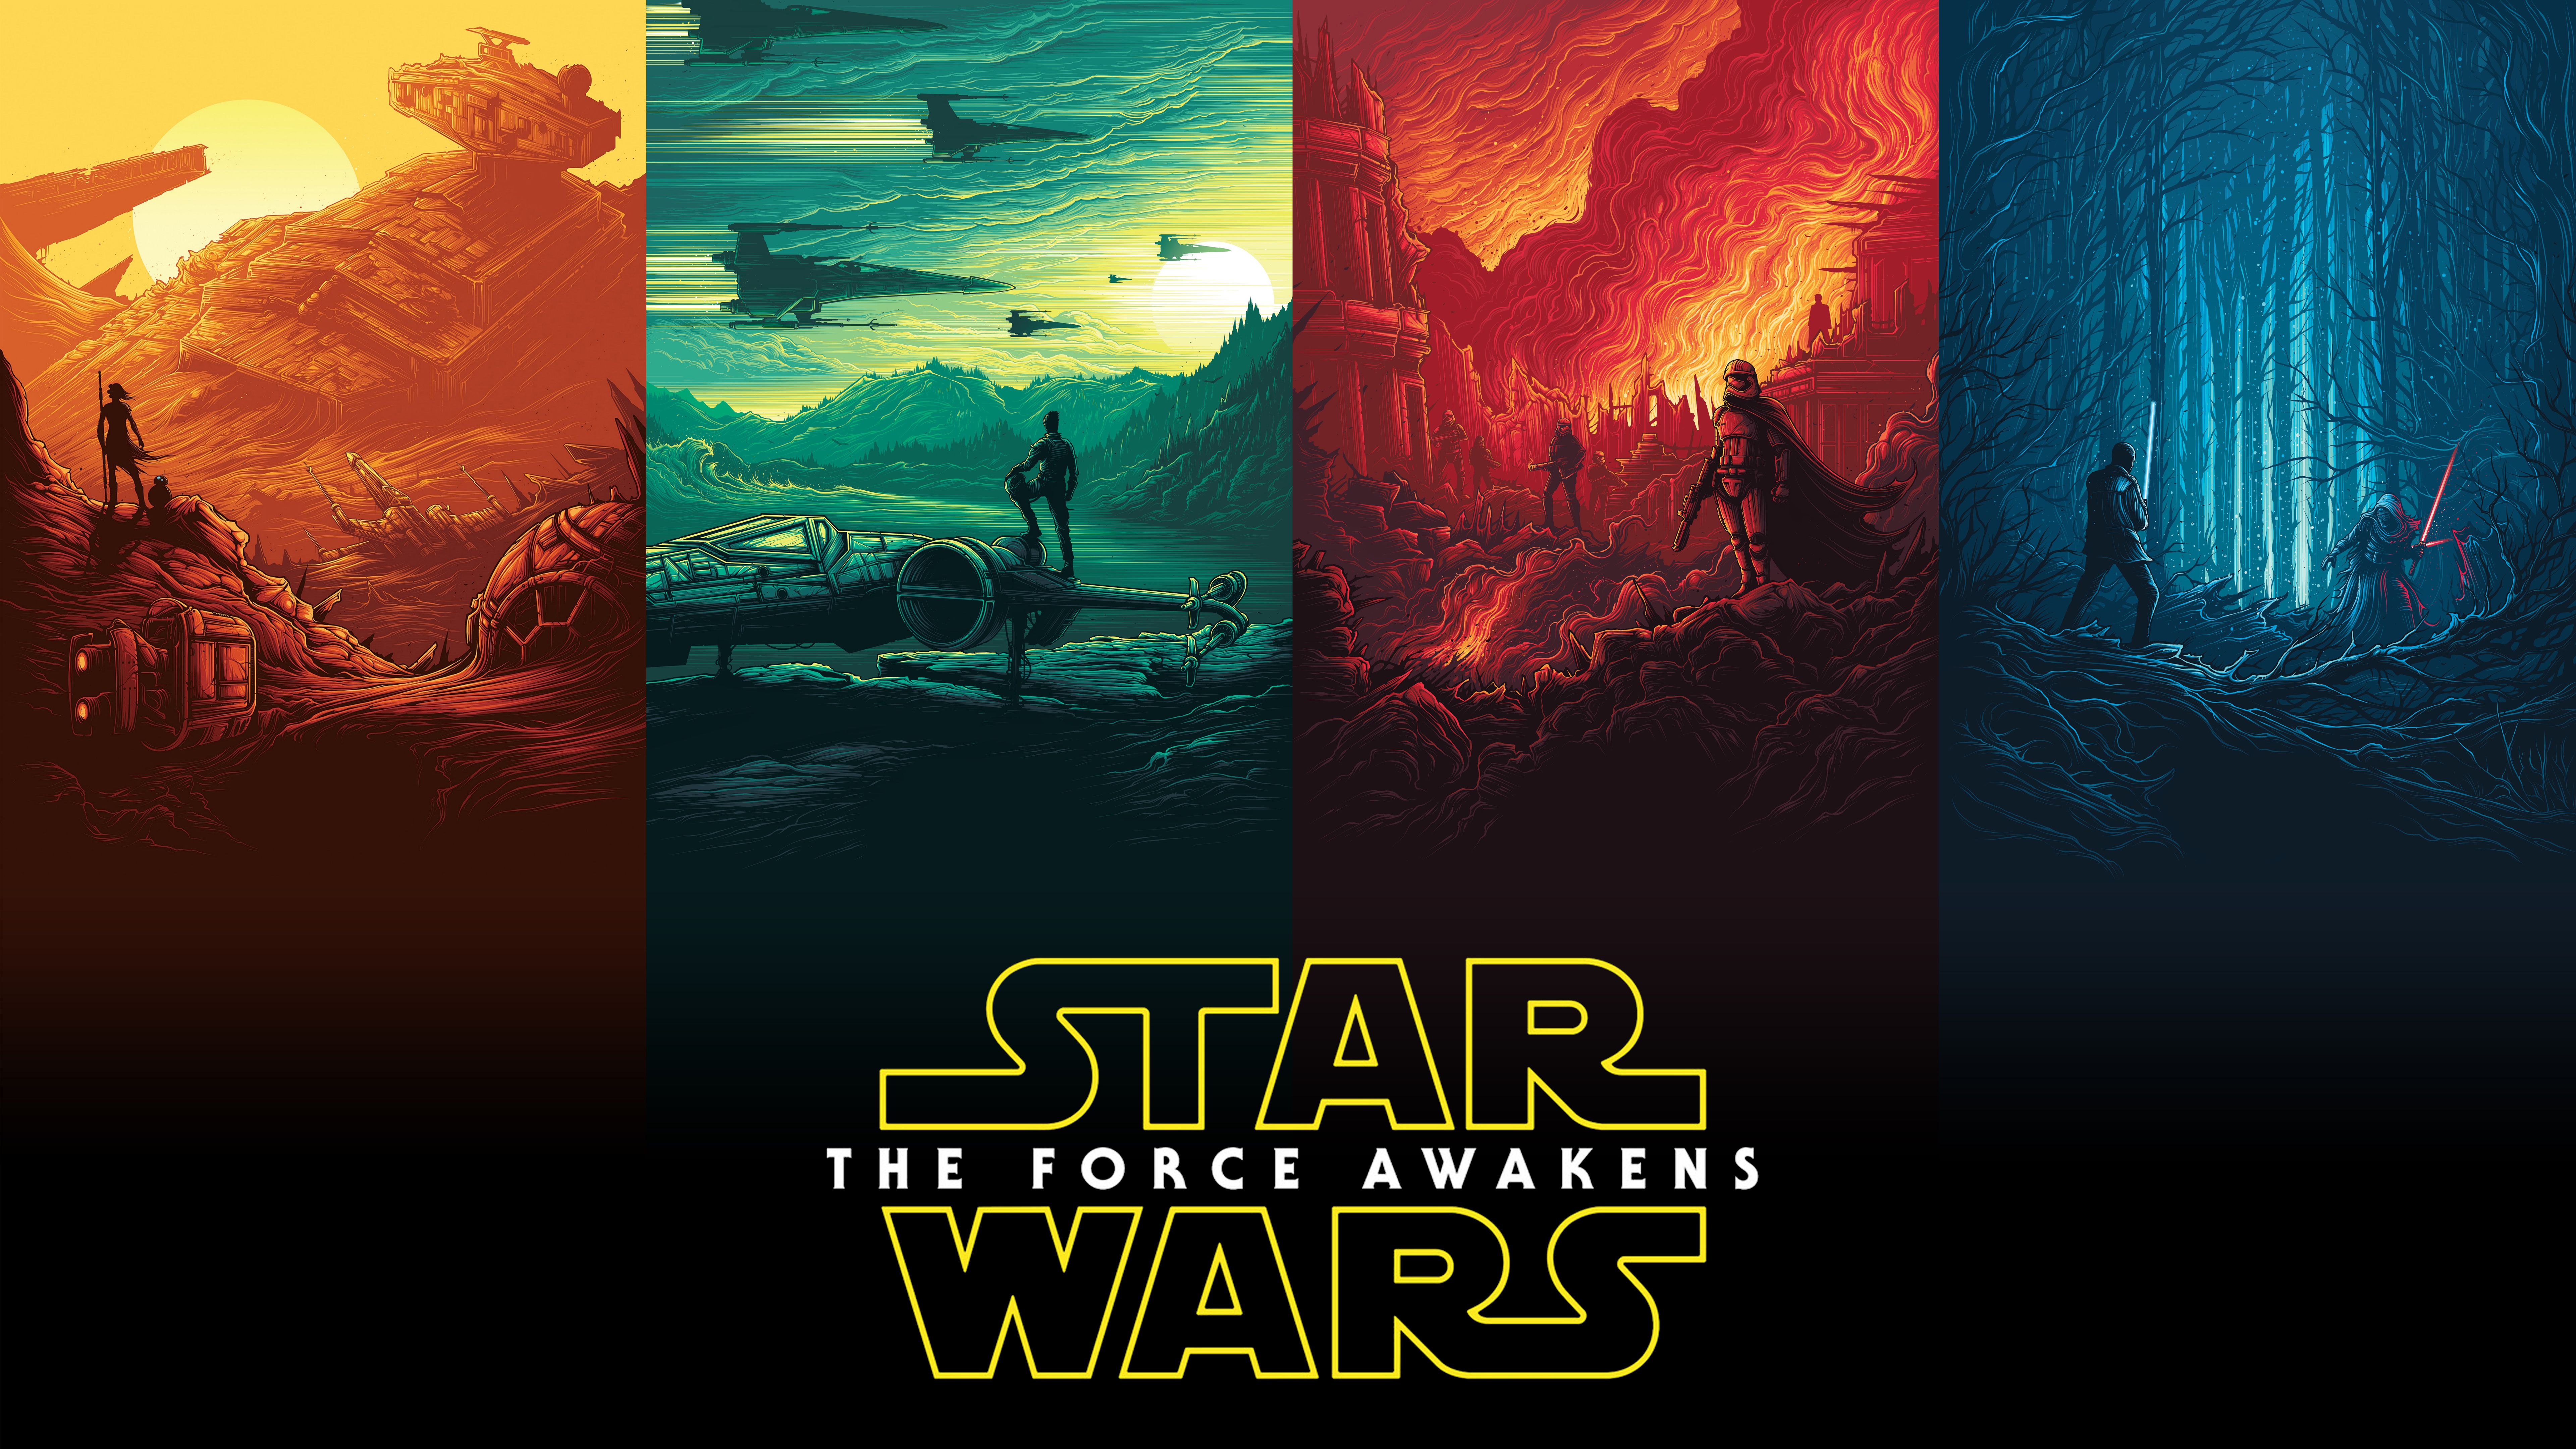 7680x4320 Star Wars Poster Logo 8k Hd 4k Wallpaper Image